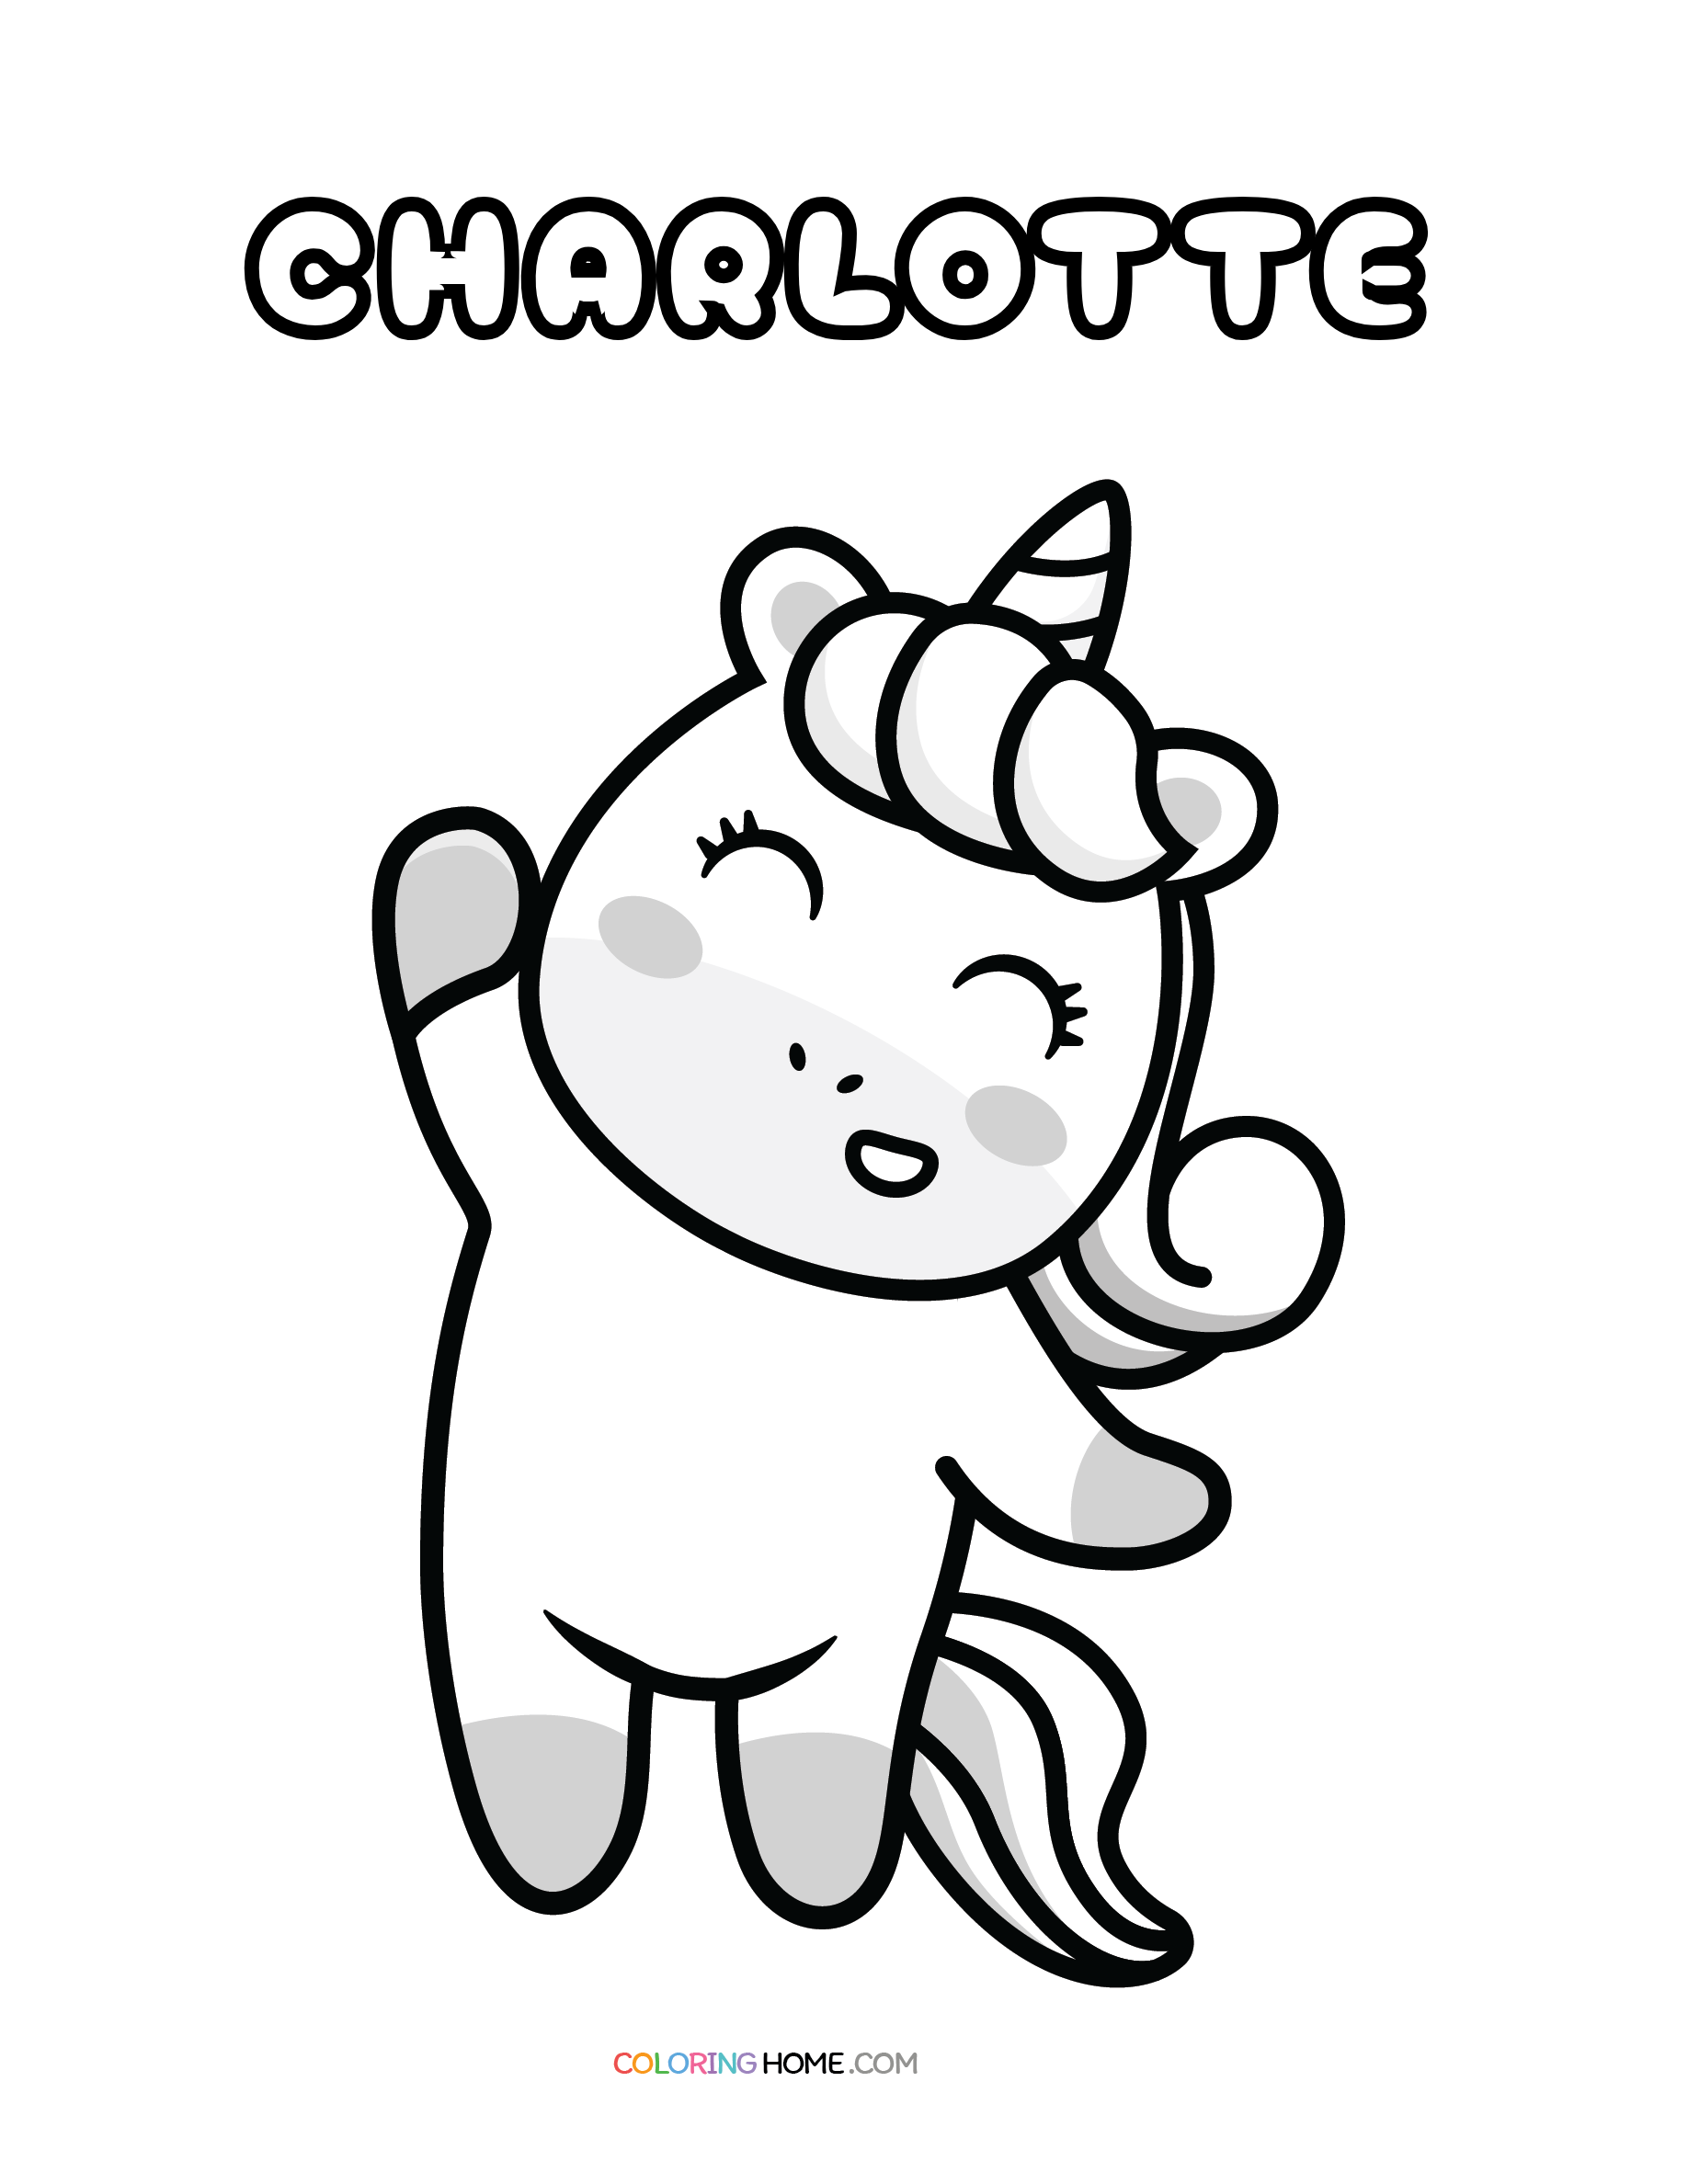 Charlotte unicorn coloring page